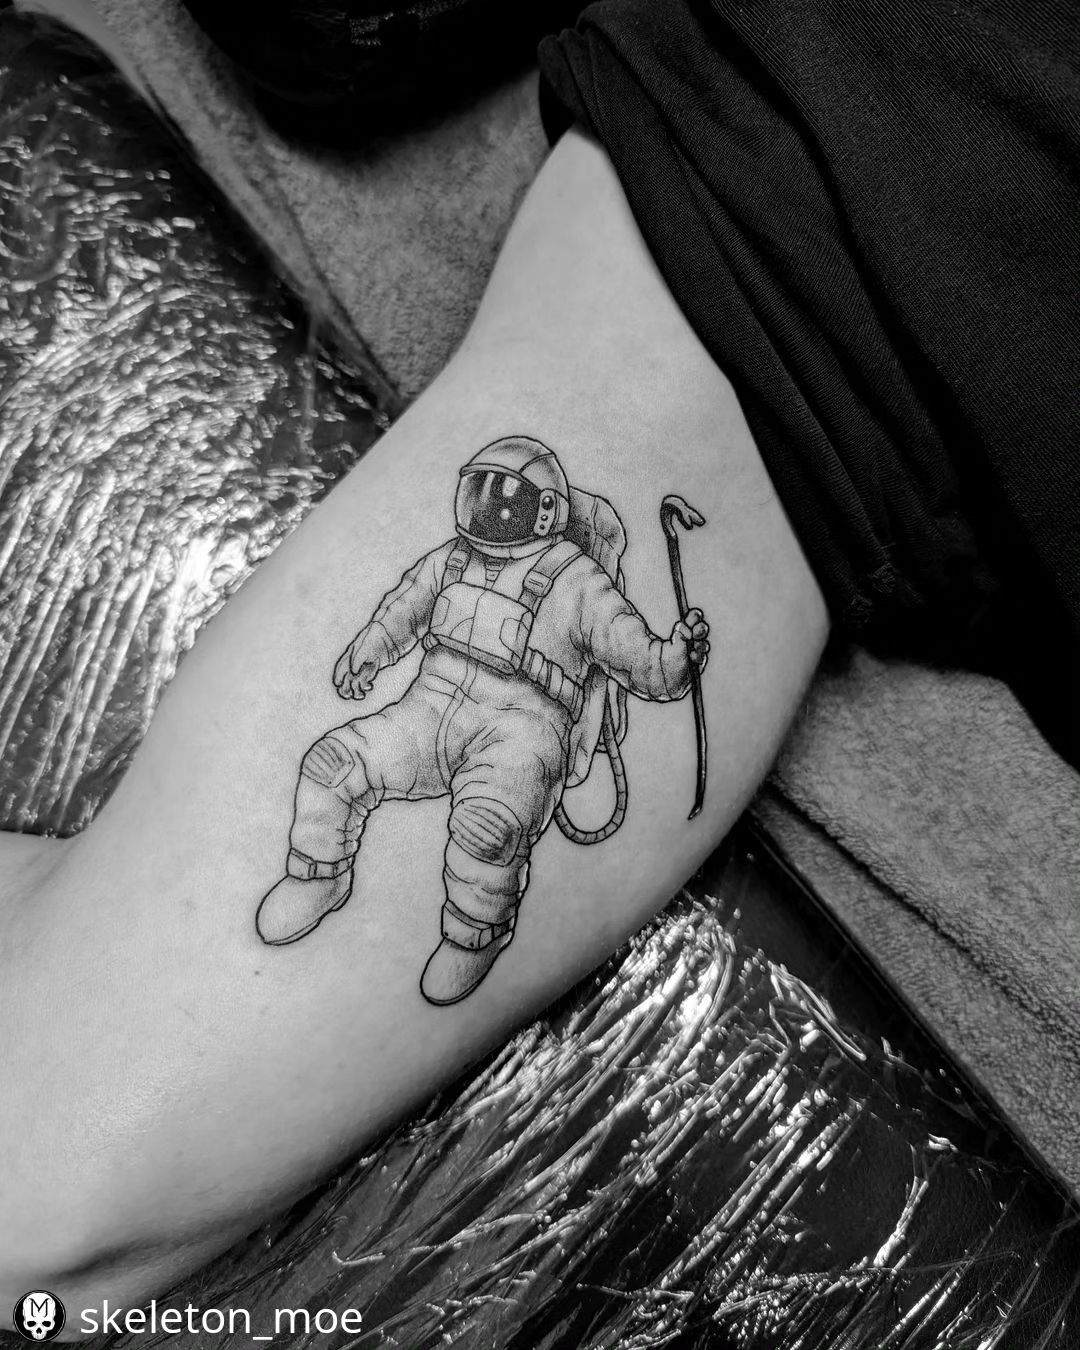 Astronaut von @skeleton_moe
• • • • • •
Astronautica #space #nasa #astronomy #co